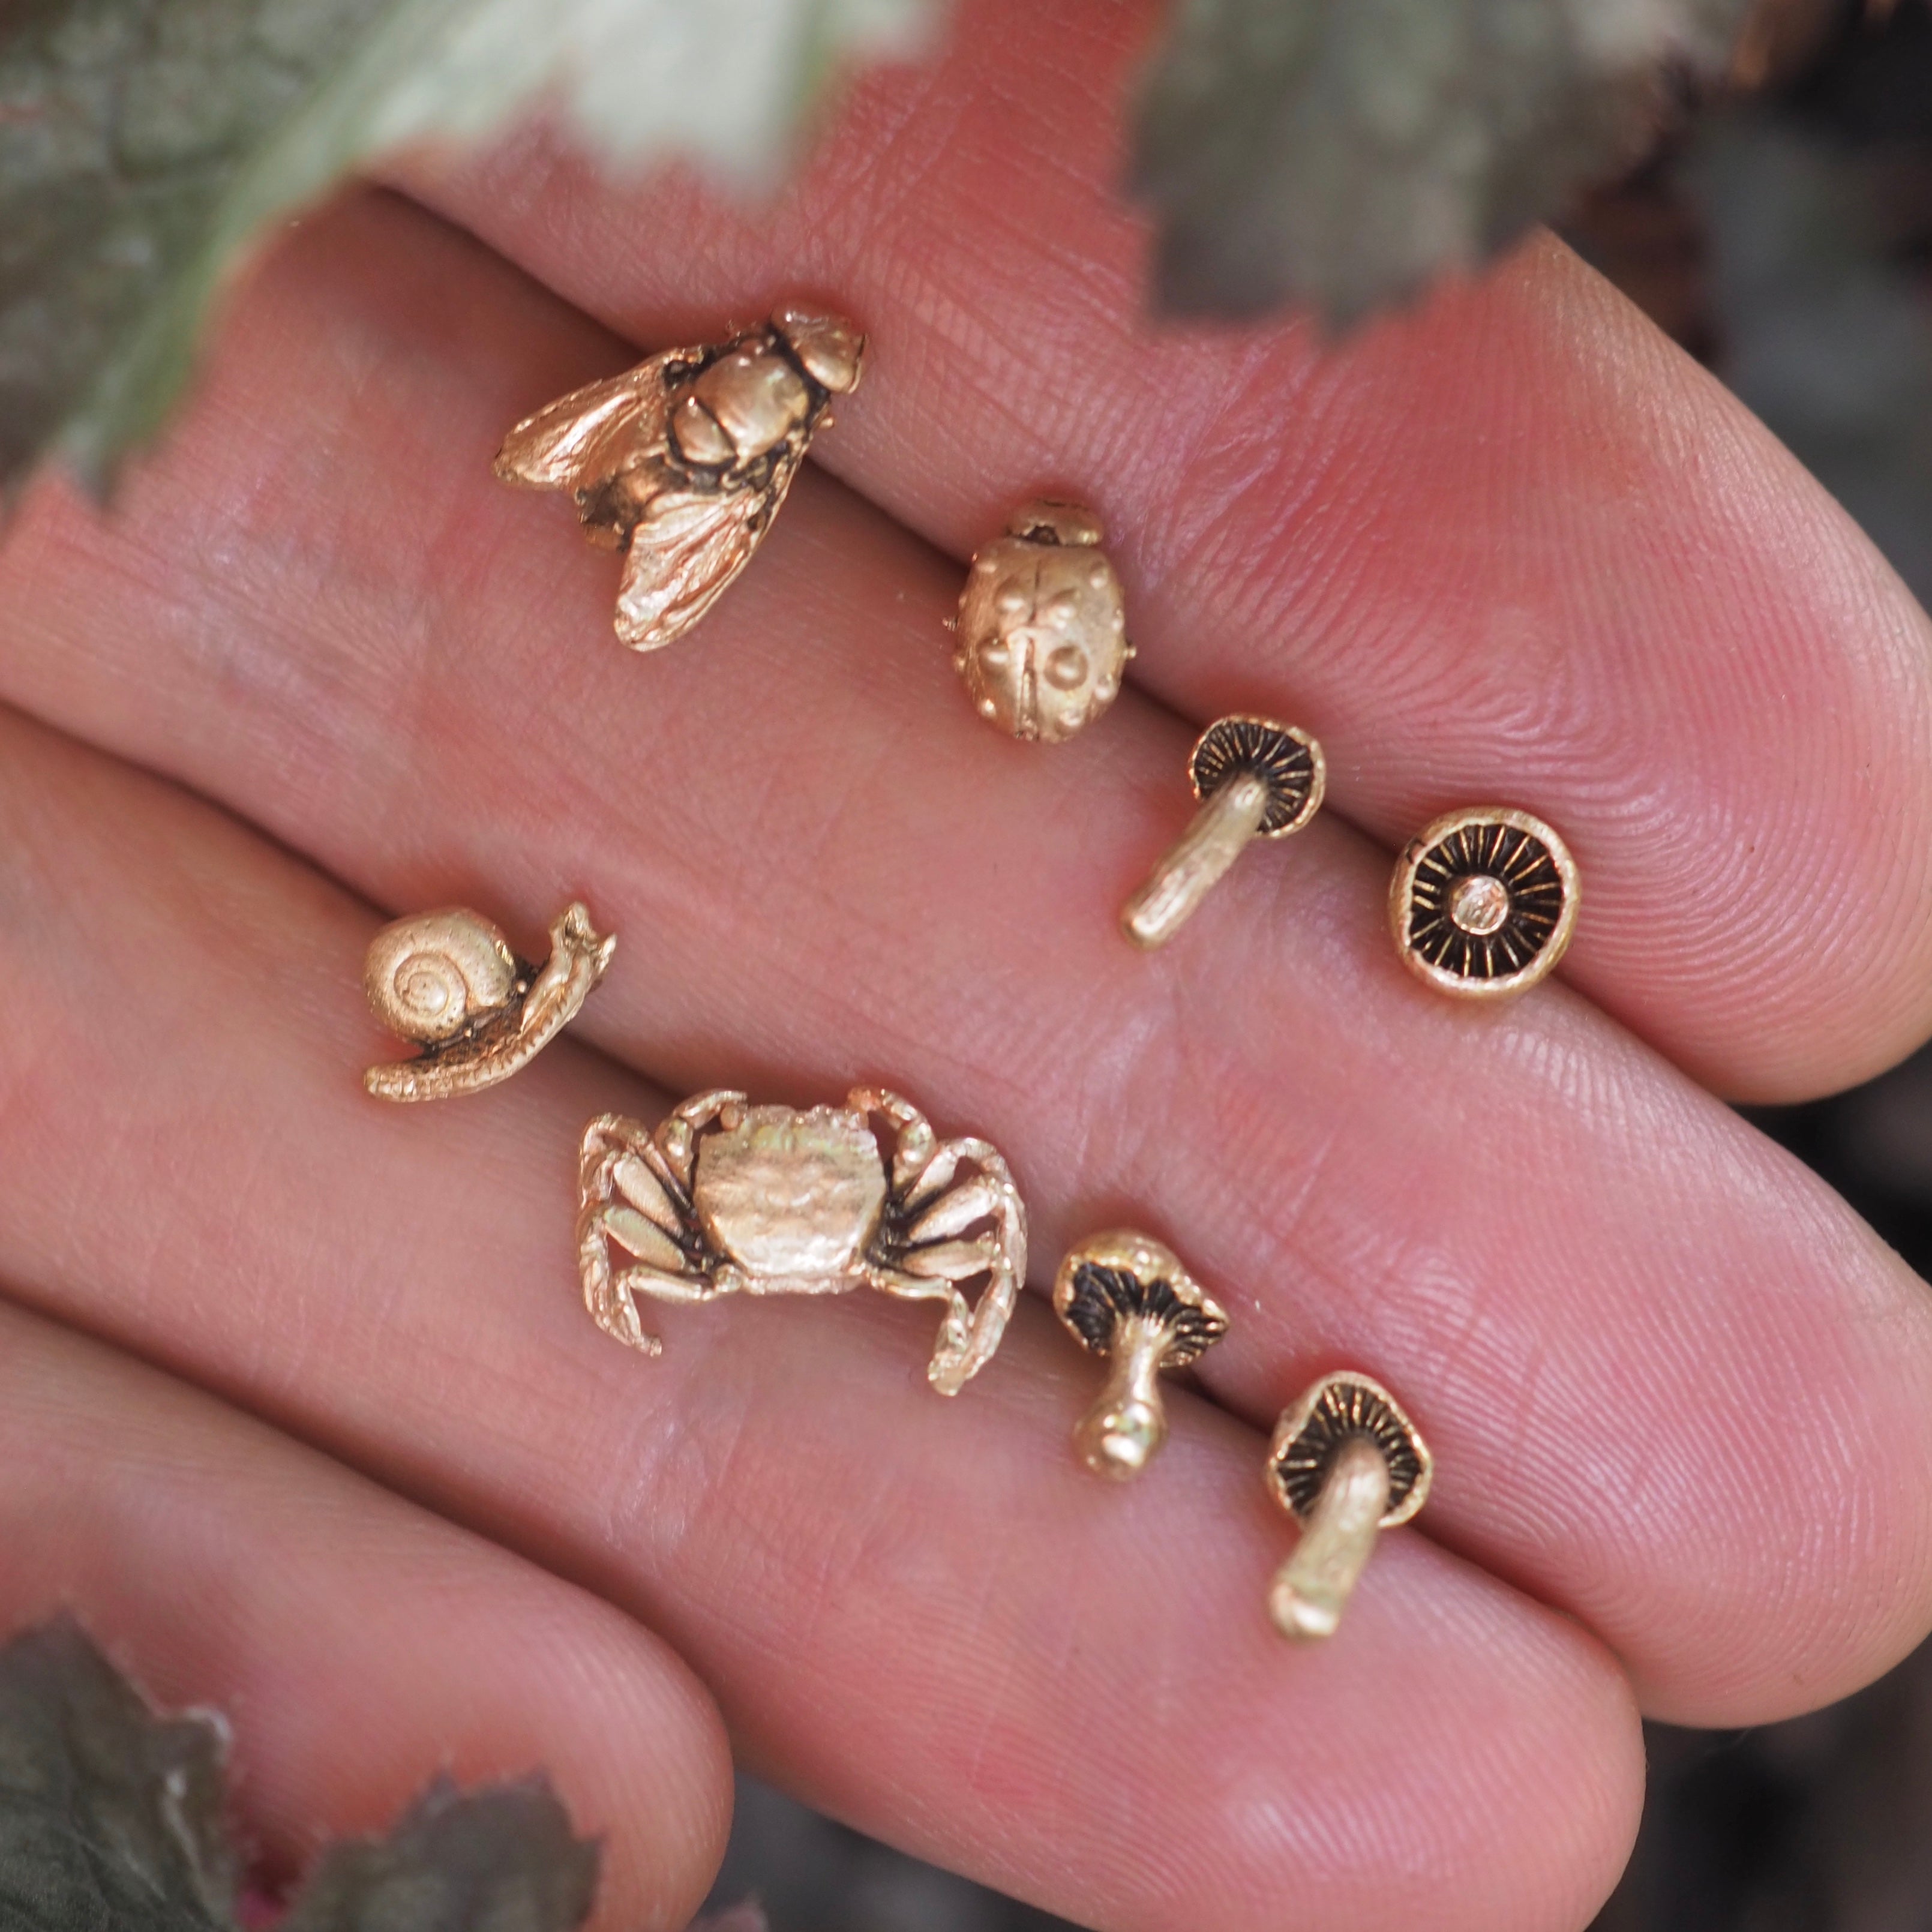 Mushroom earrings in gold